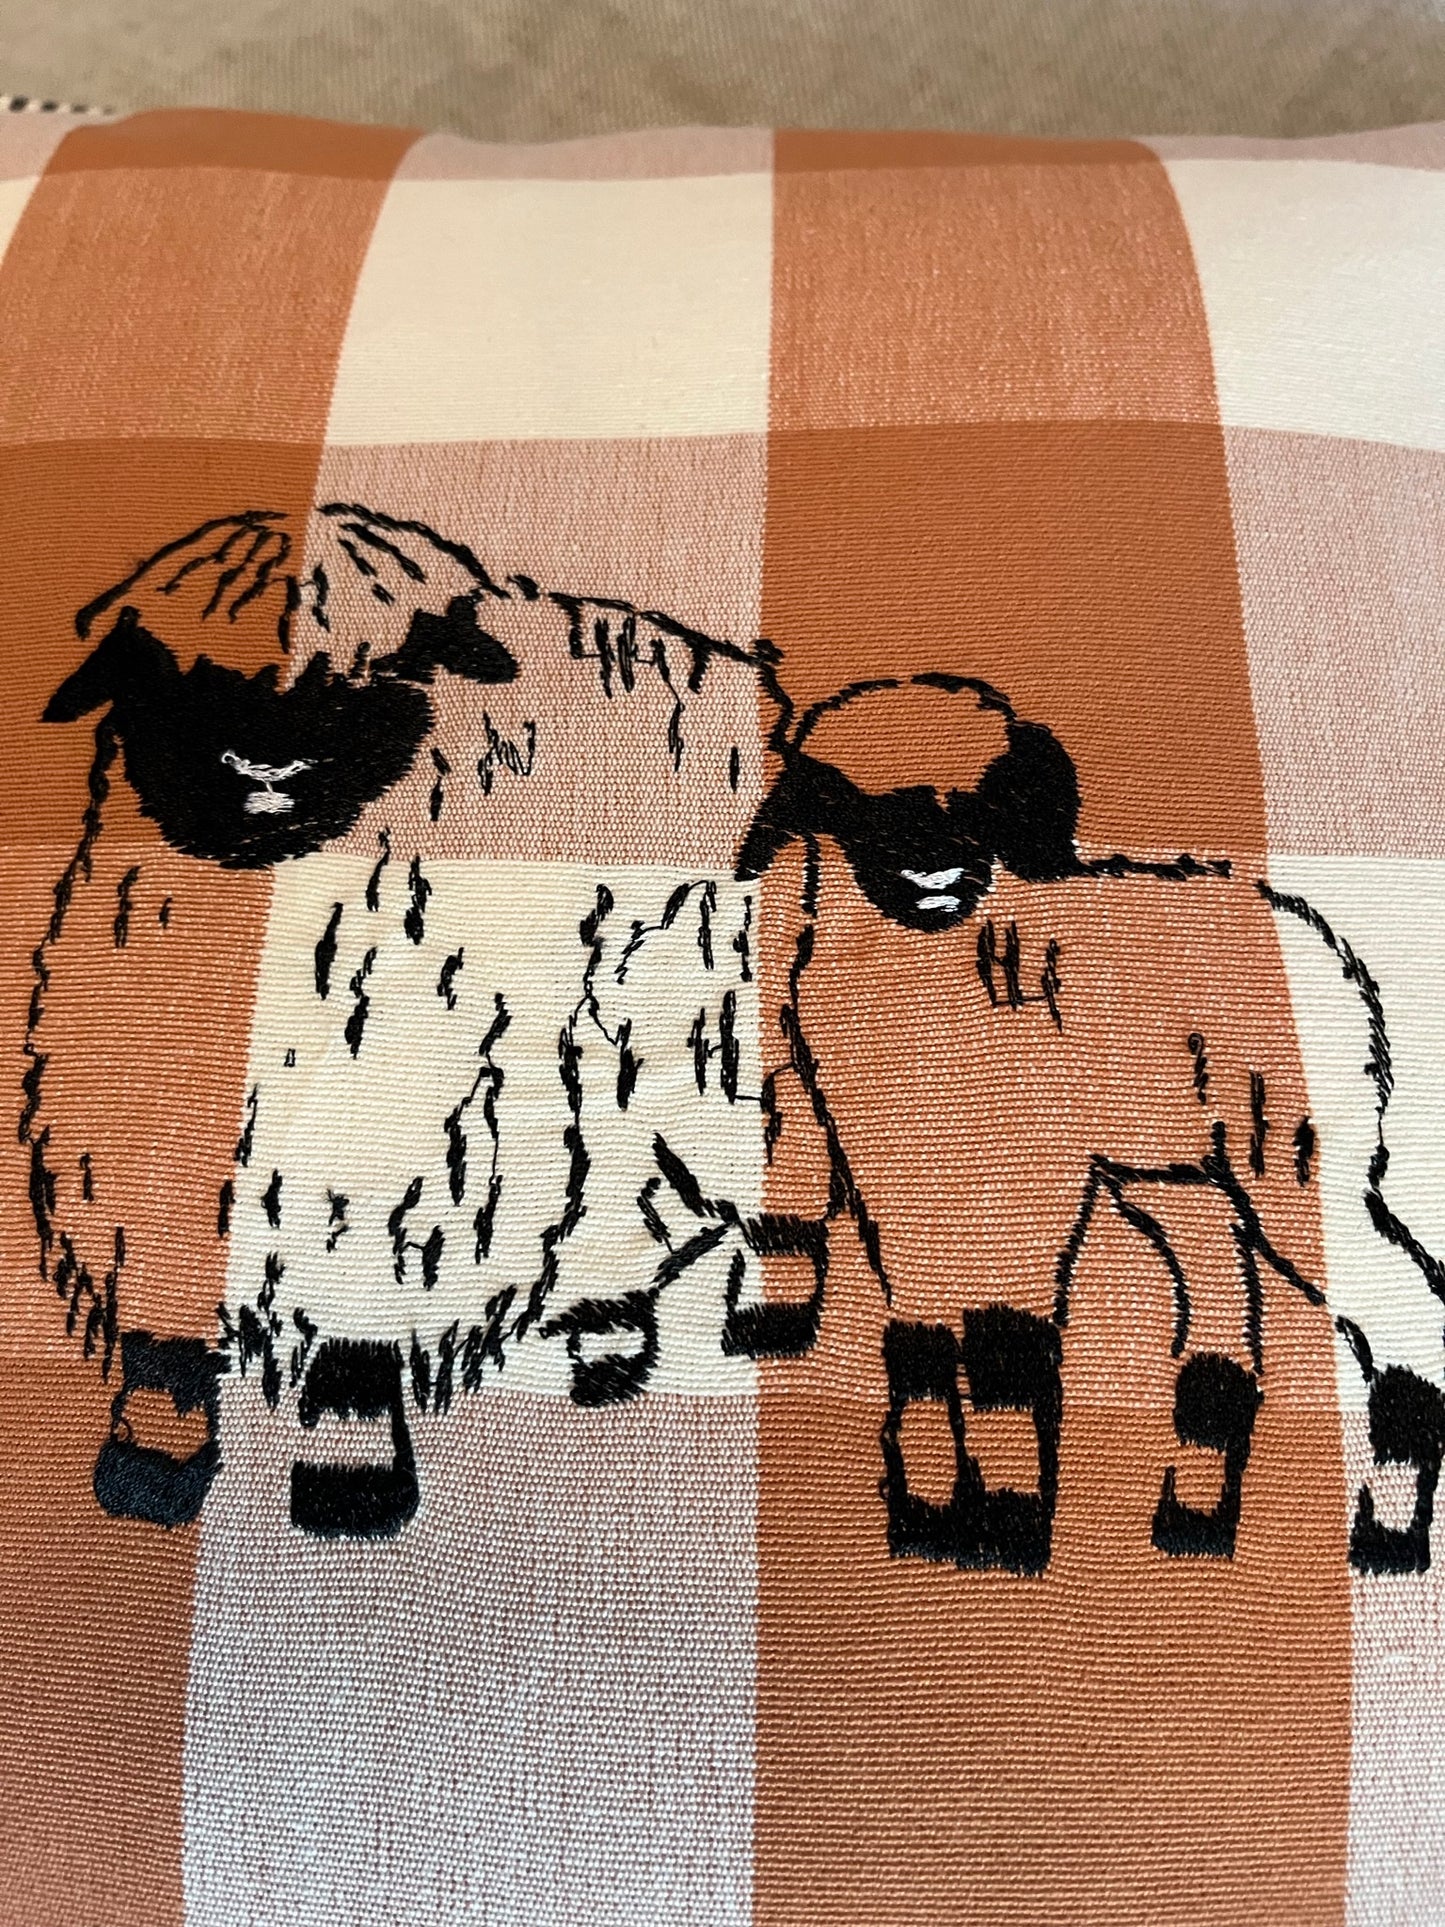 Blacknose sheep cushion cover, two sheep, orange/white